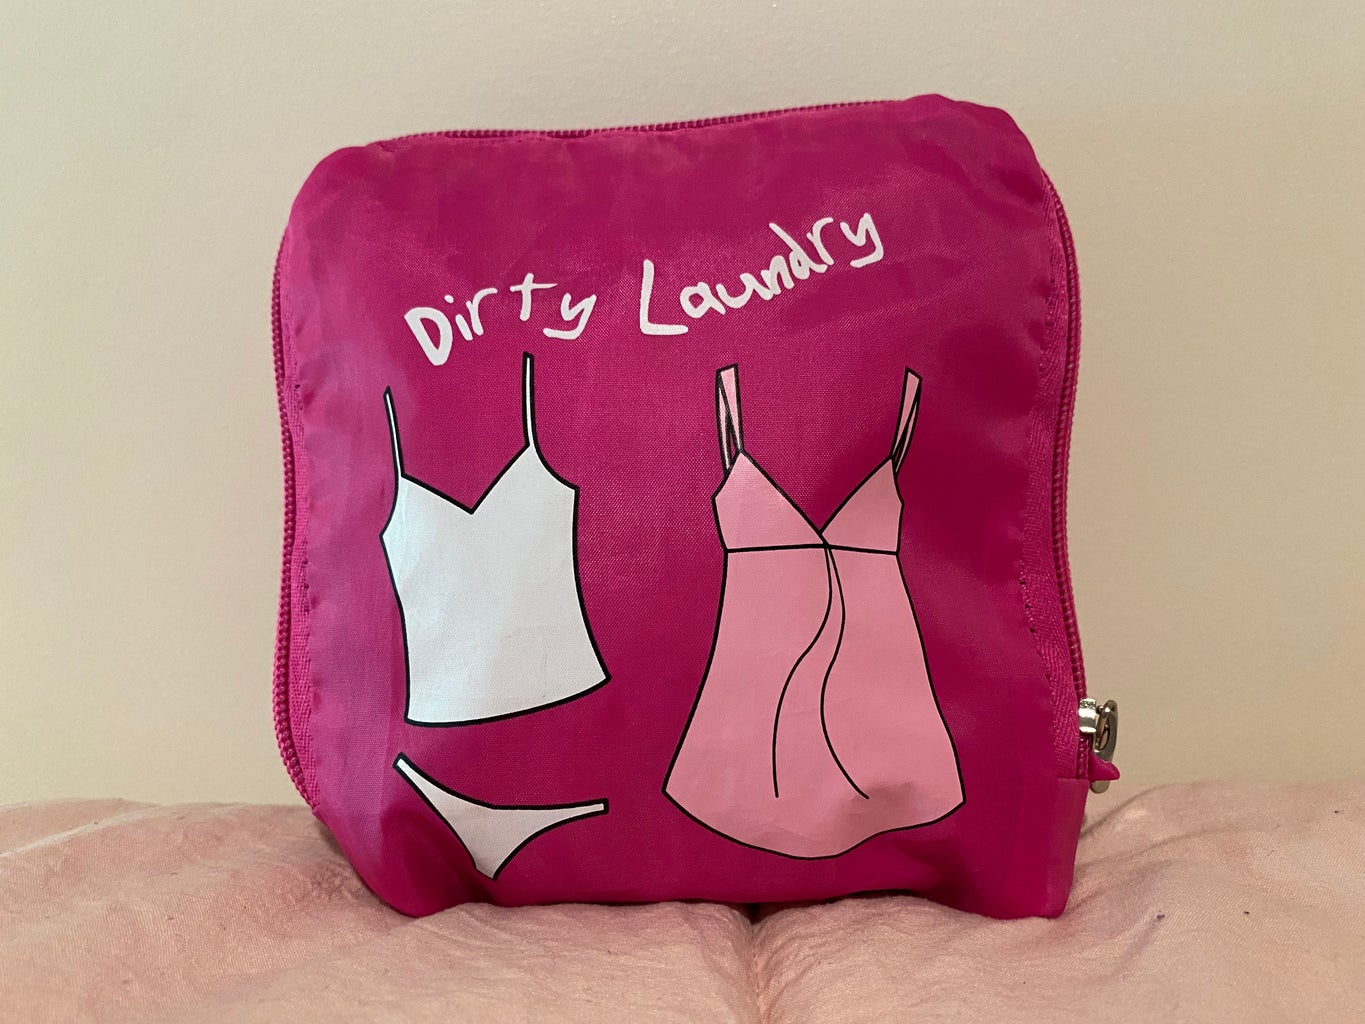 A travel laundry bag still folded